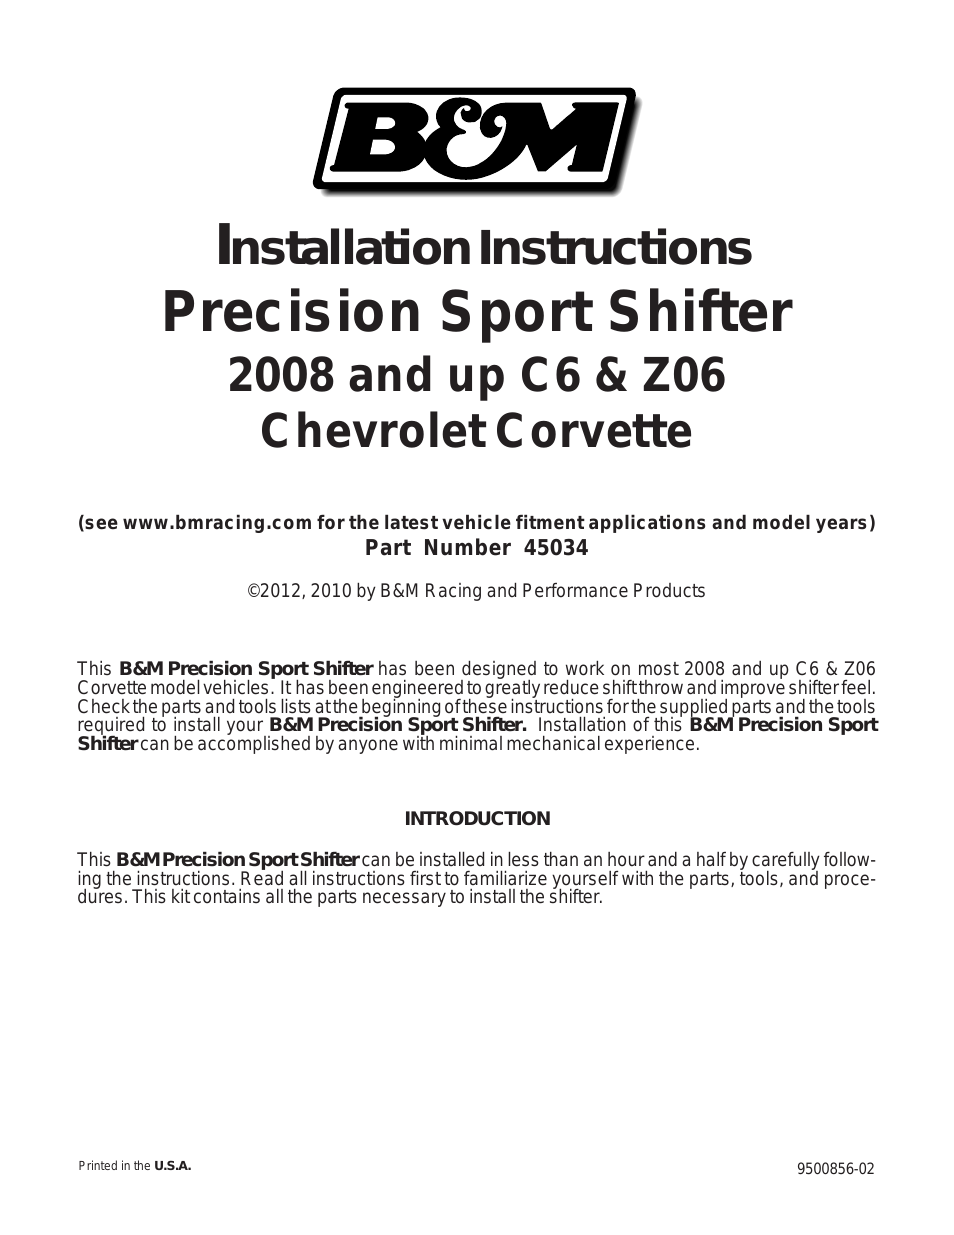 45034 PRECISION SPORT SHIFTER - 08 & UP CORVETTE C6 & Z06